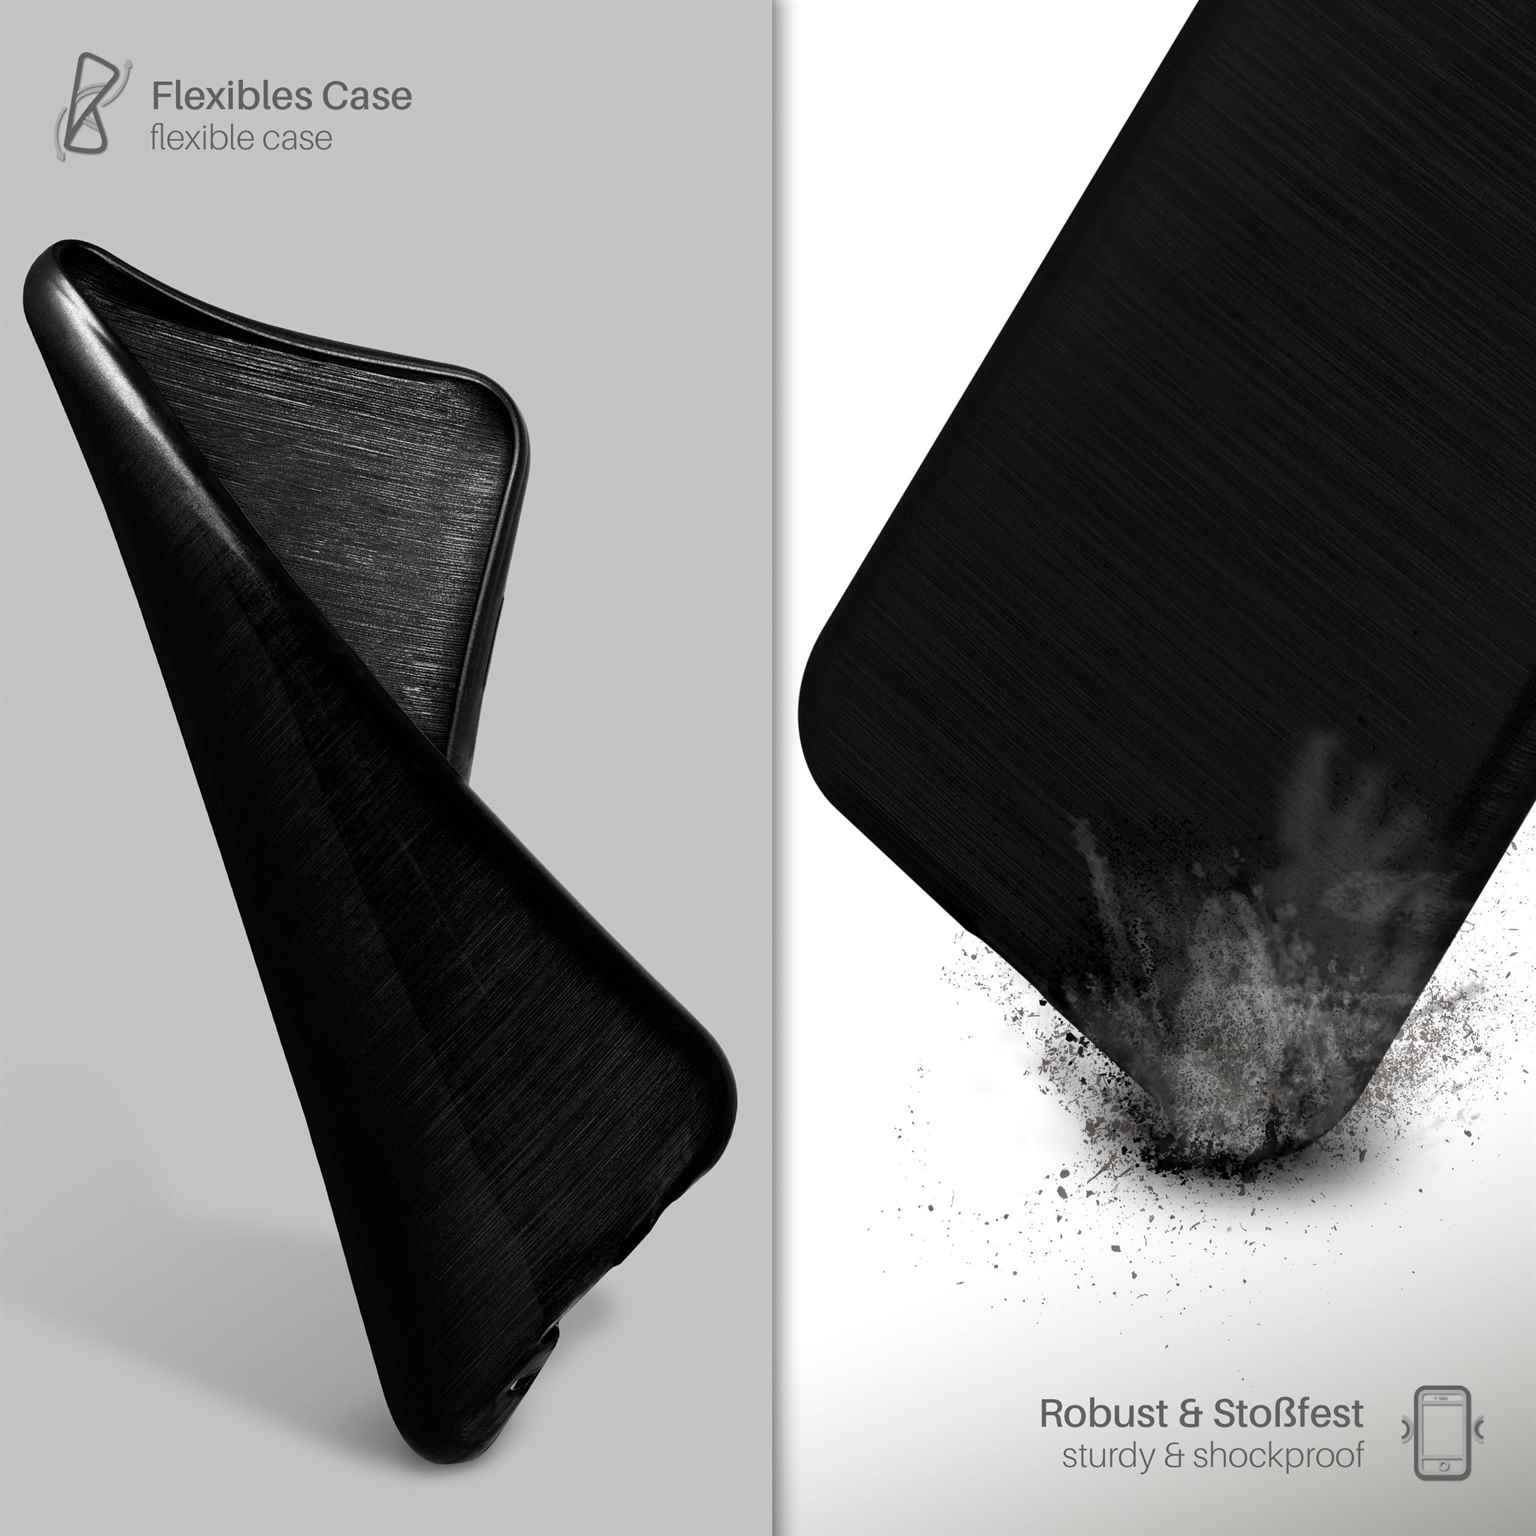 MOEX Brushed Case, Backcover, Apple, iPhone Slate-Black XS